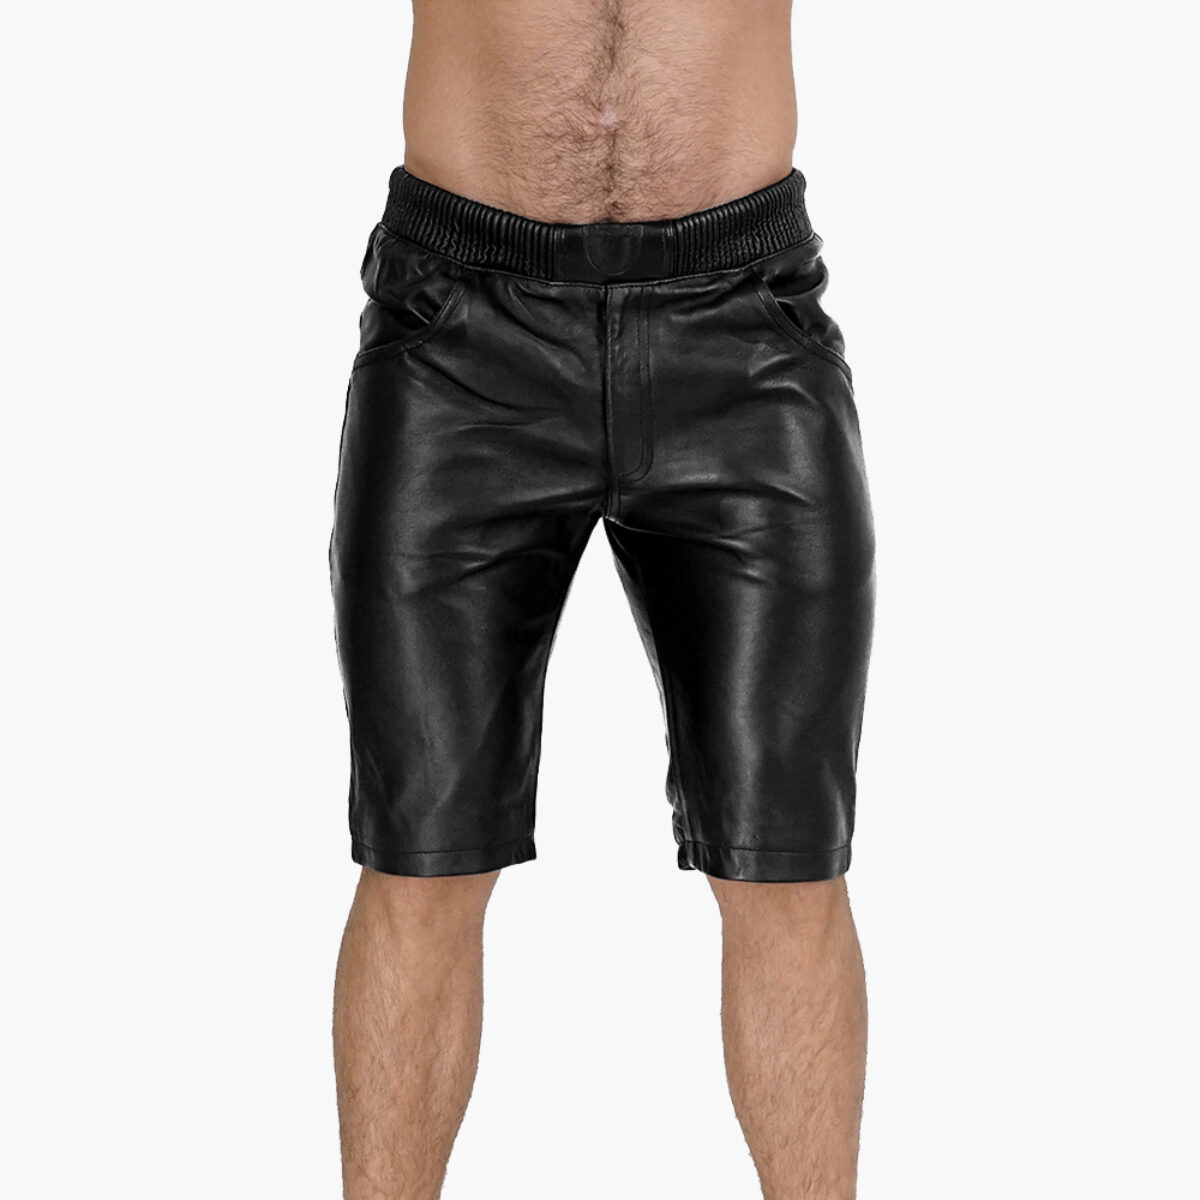 men's Black Leather Shorts - Mr Leather Shop